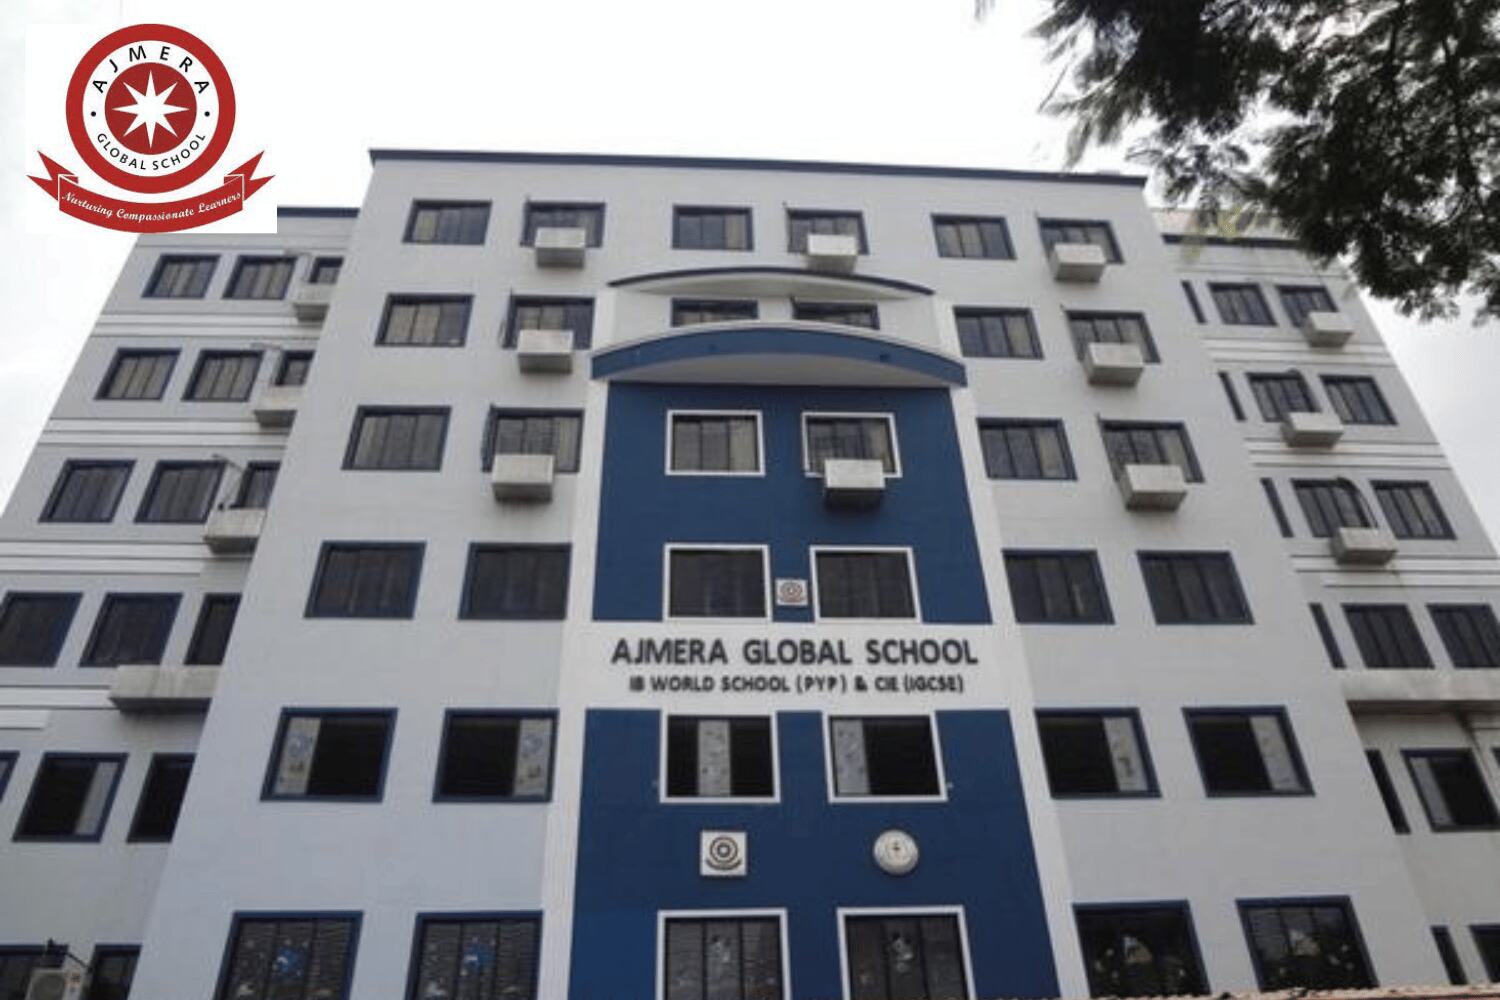 Ajmera Global School